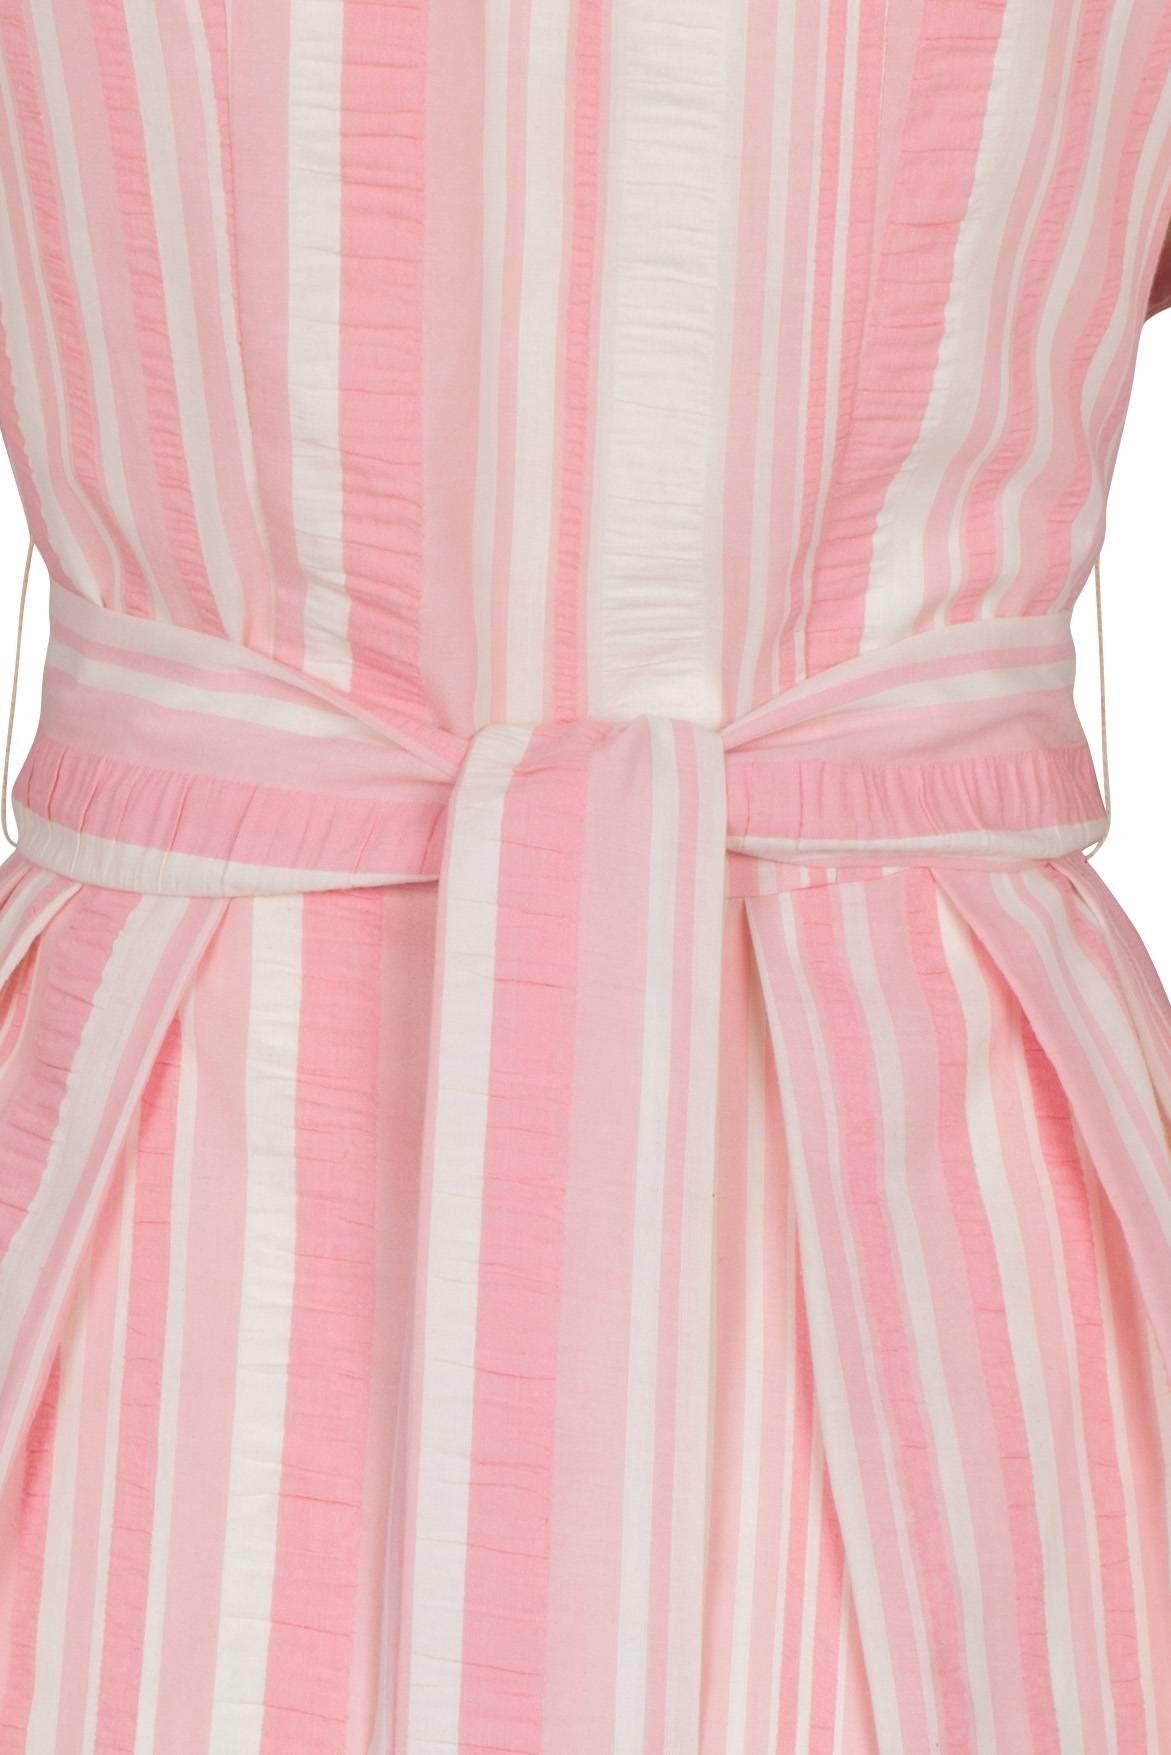 1970s Estevez Seersucker Pink and Ivory Candy Stripe Dress Size S For Sale 4